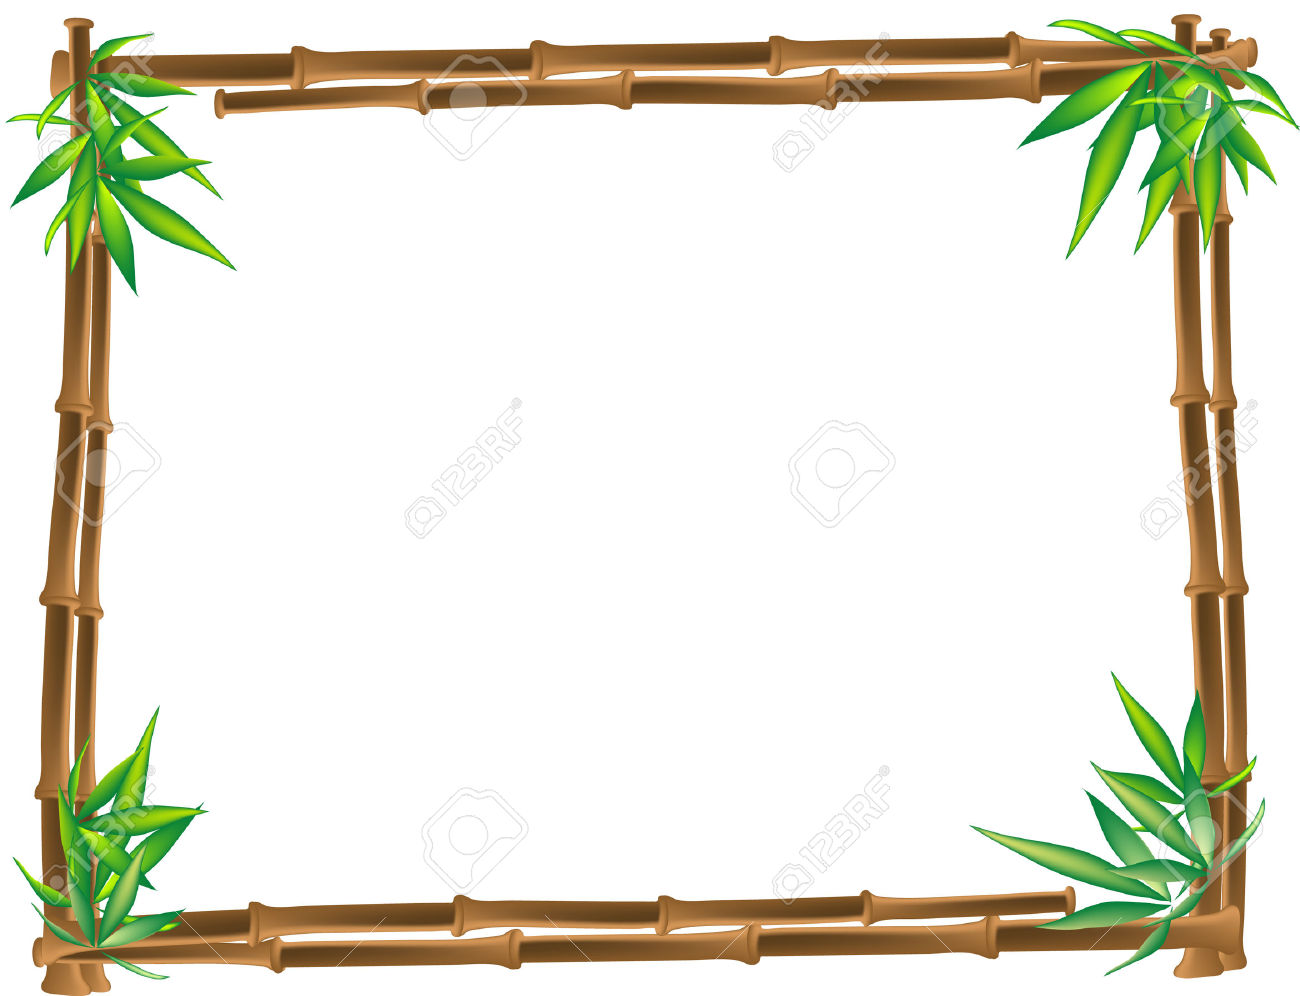 bamboo clipart banner